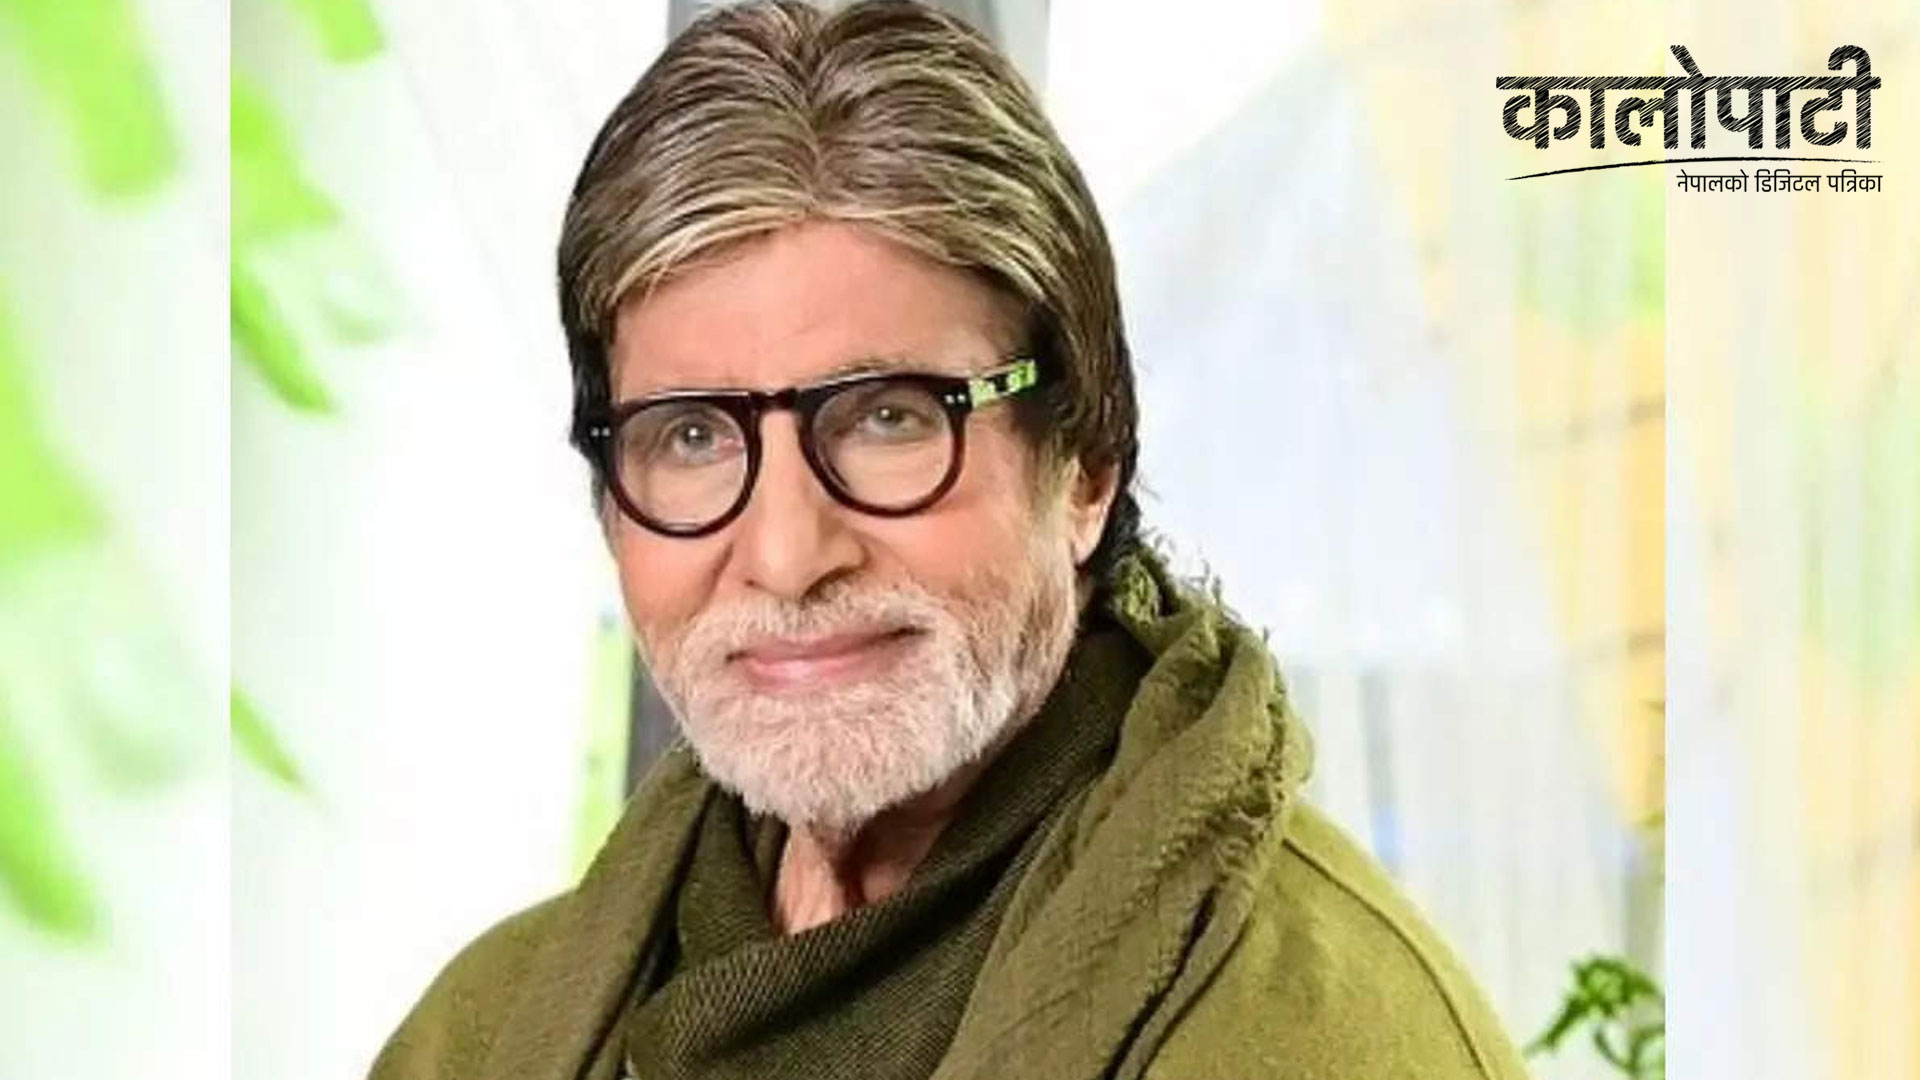 भारतका चर्चित कलाकार अमिताभ बच्चन कोरोना भाइरसबाट सङ्क्रमित